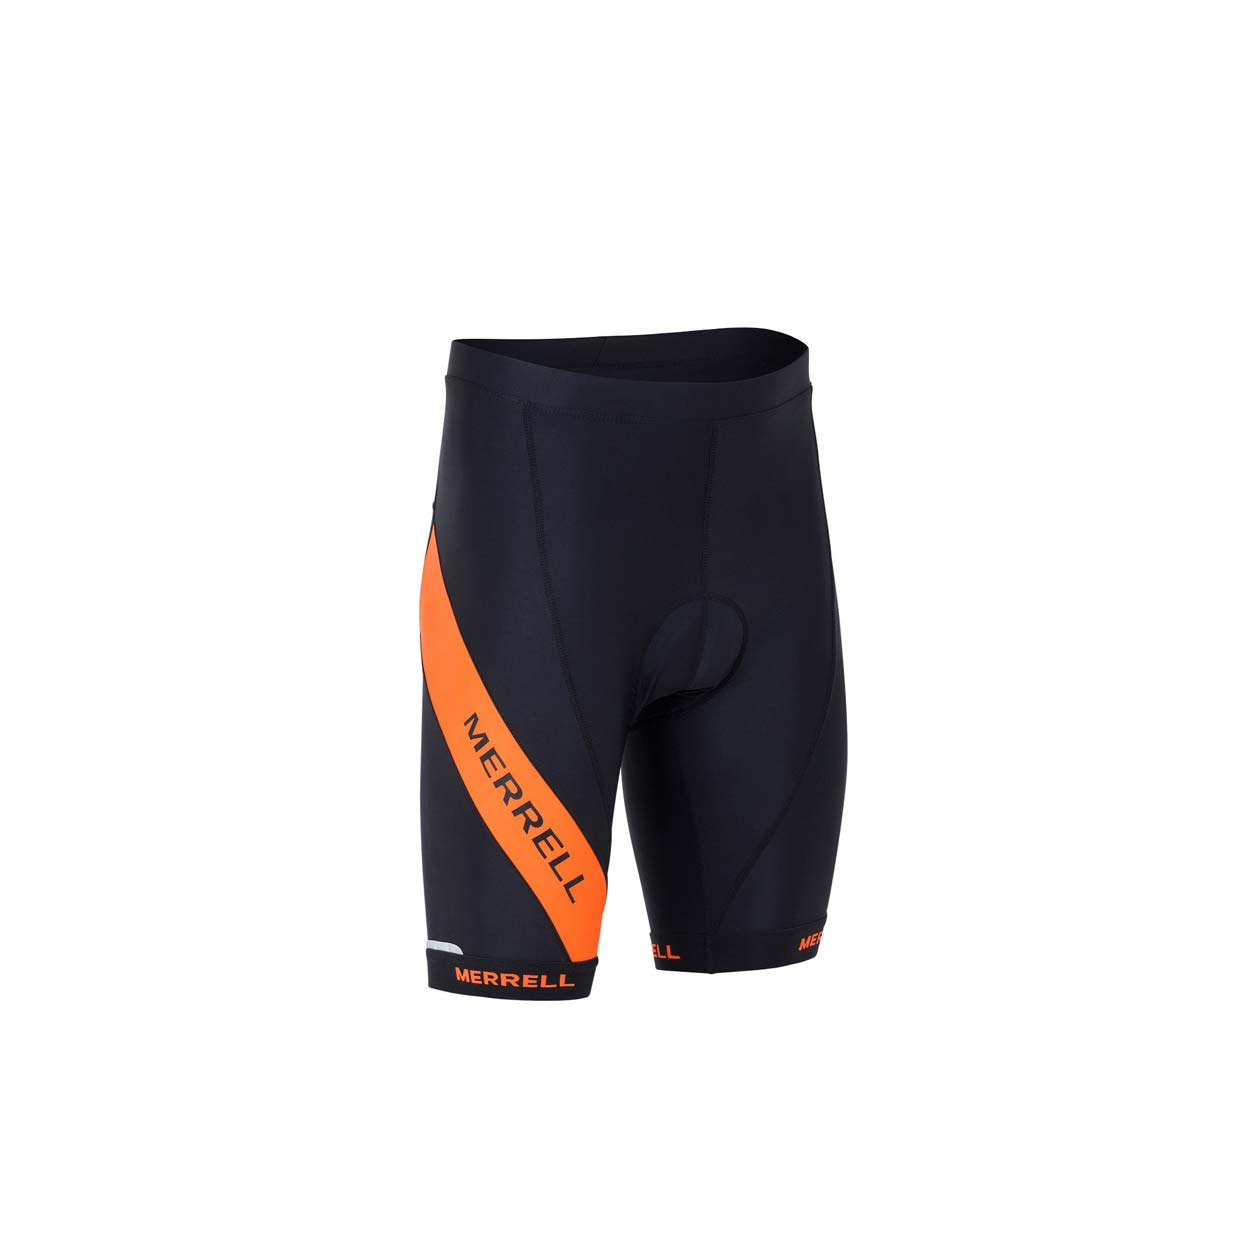 merrell cycling shorts